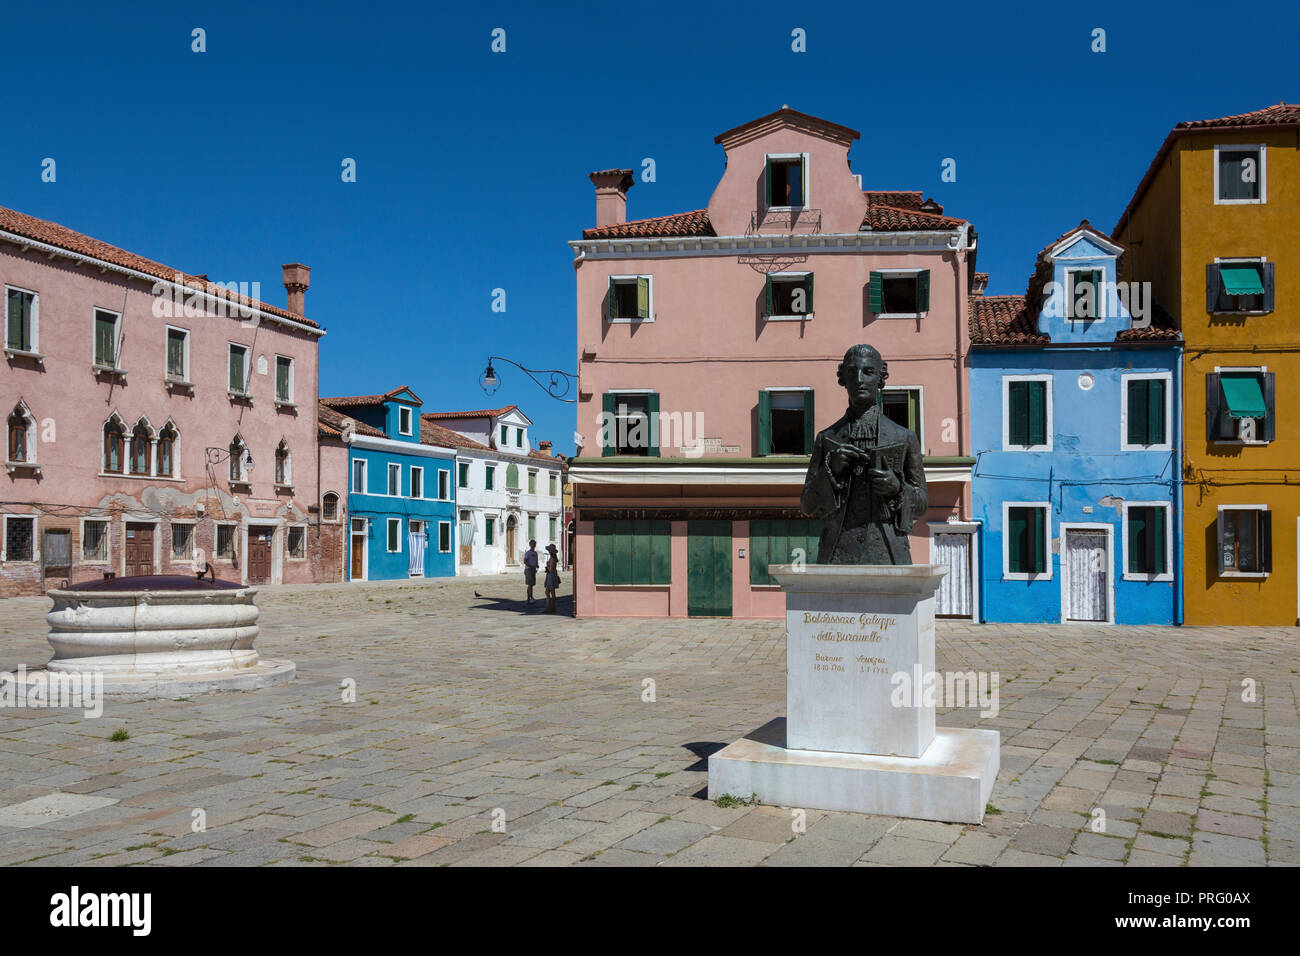 Piazza Baldassare Galuppi on the Island of Burano in the Venetian Lagoon near Venice, Italy. Stock Photo